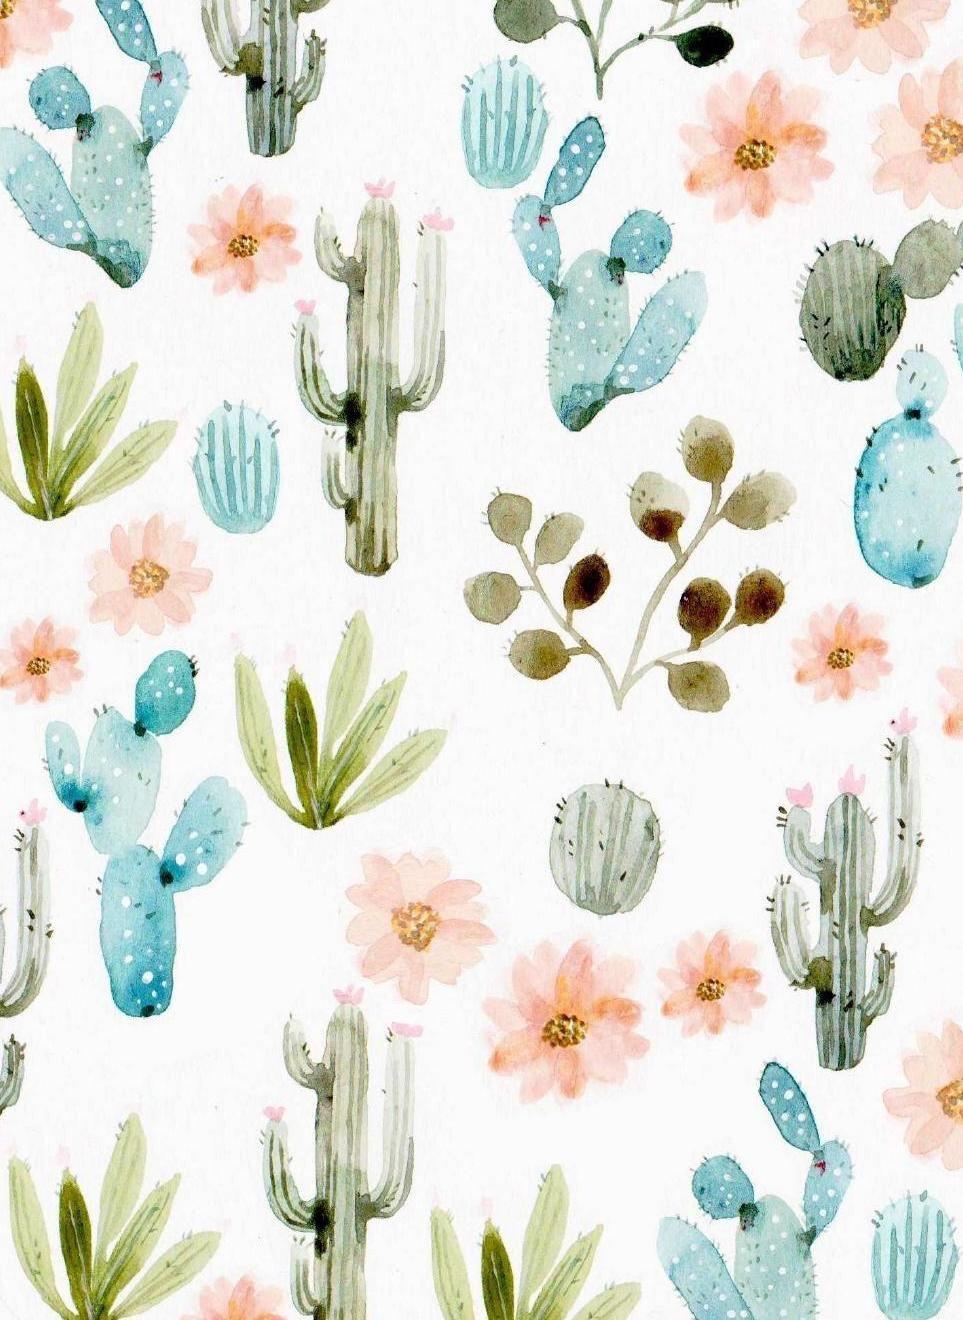 background #cactus #background #floral #pastel #tumblr